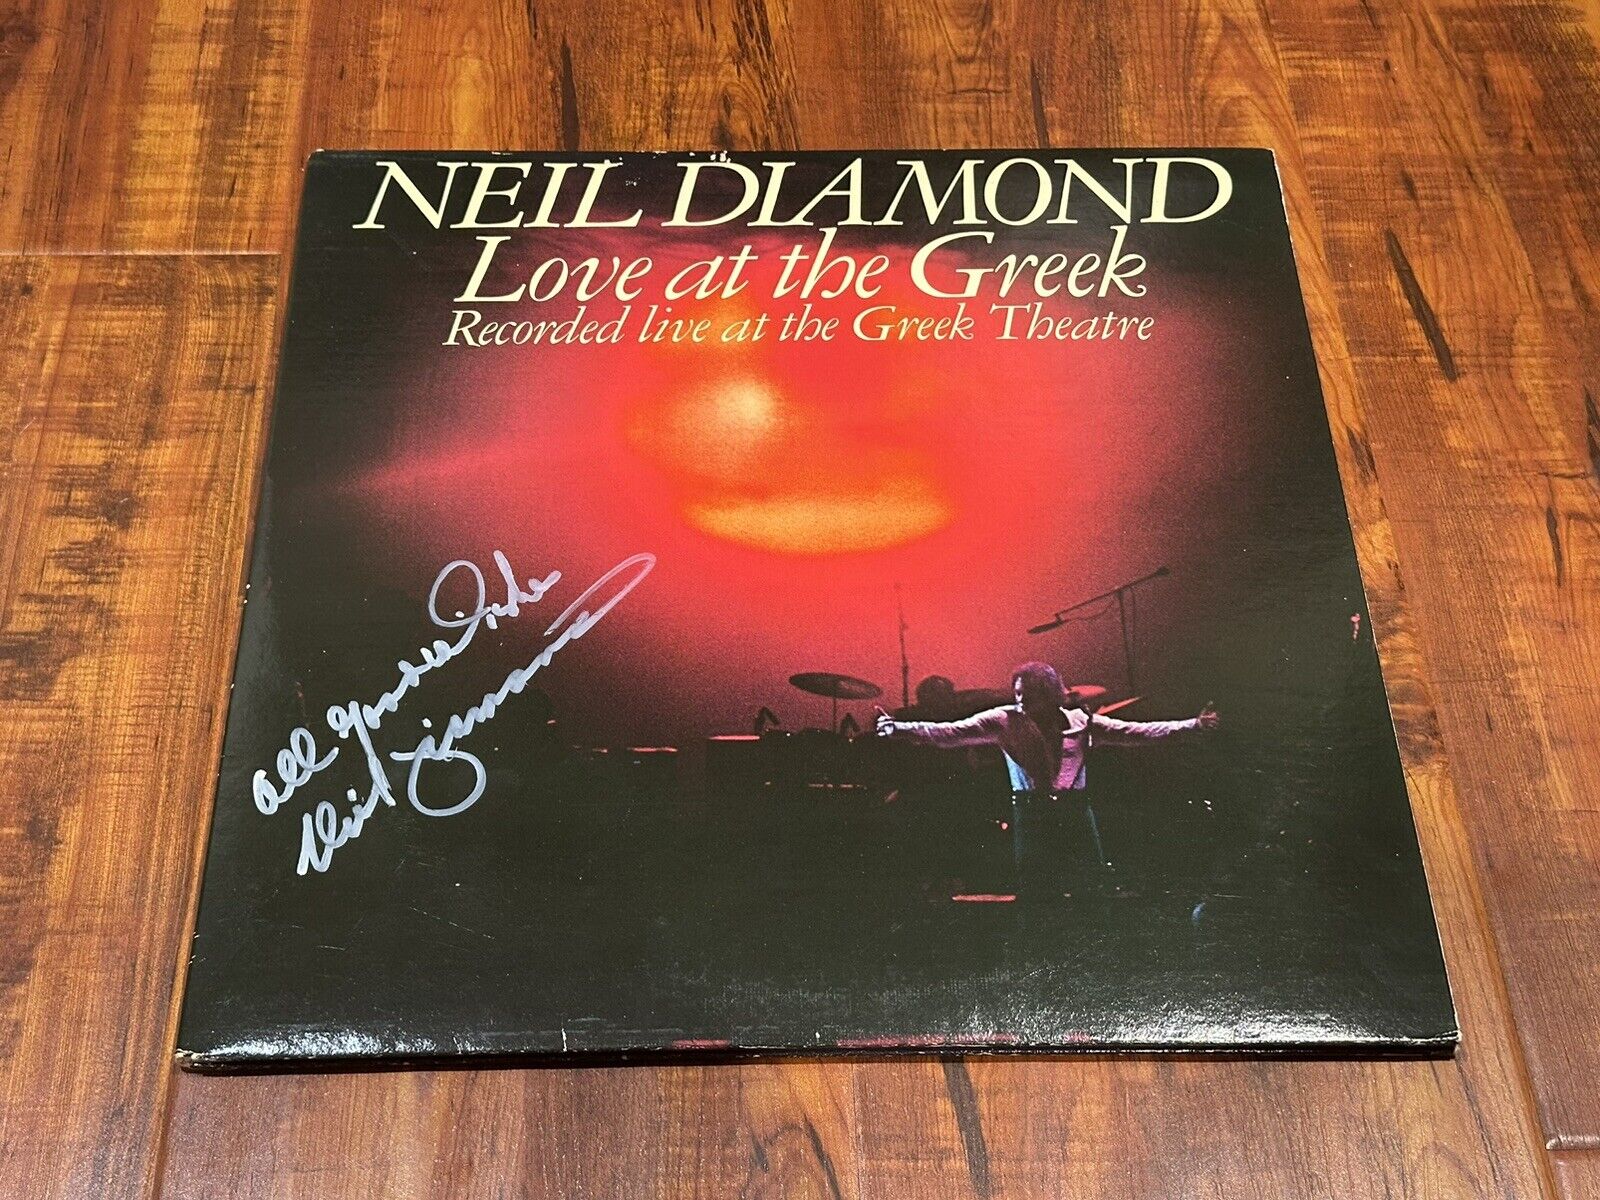 Vintage 1977 Neil Diamond Rare Demo Love at the Greek Vinyl Record LP - Signed